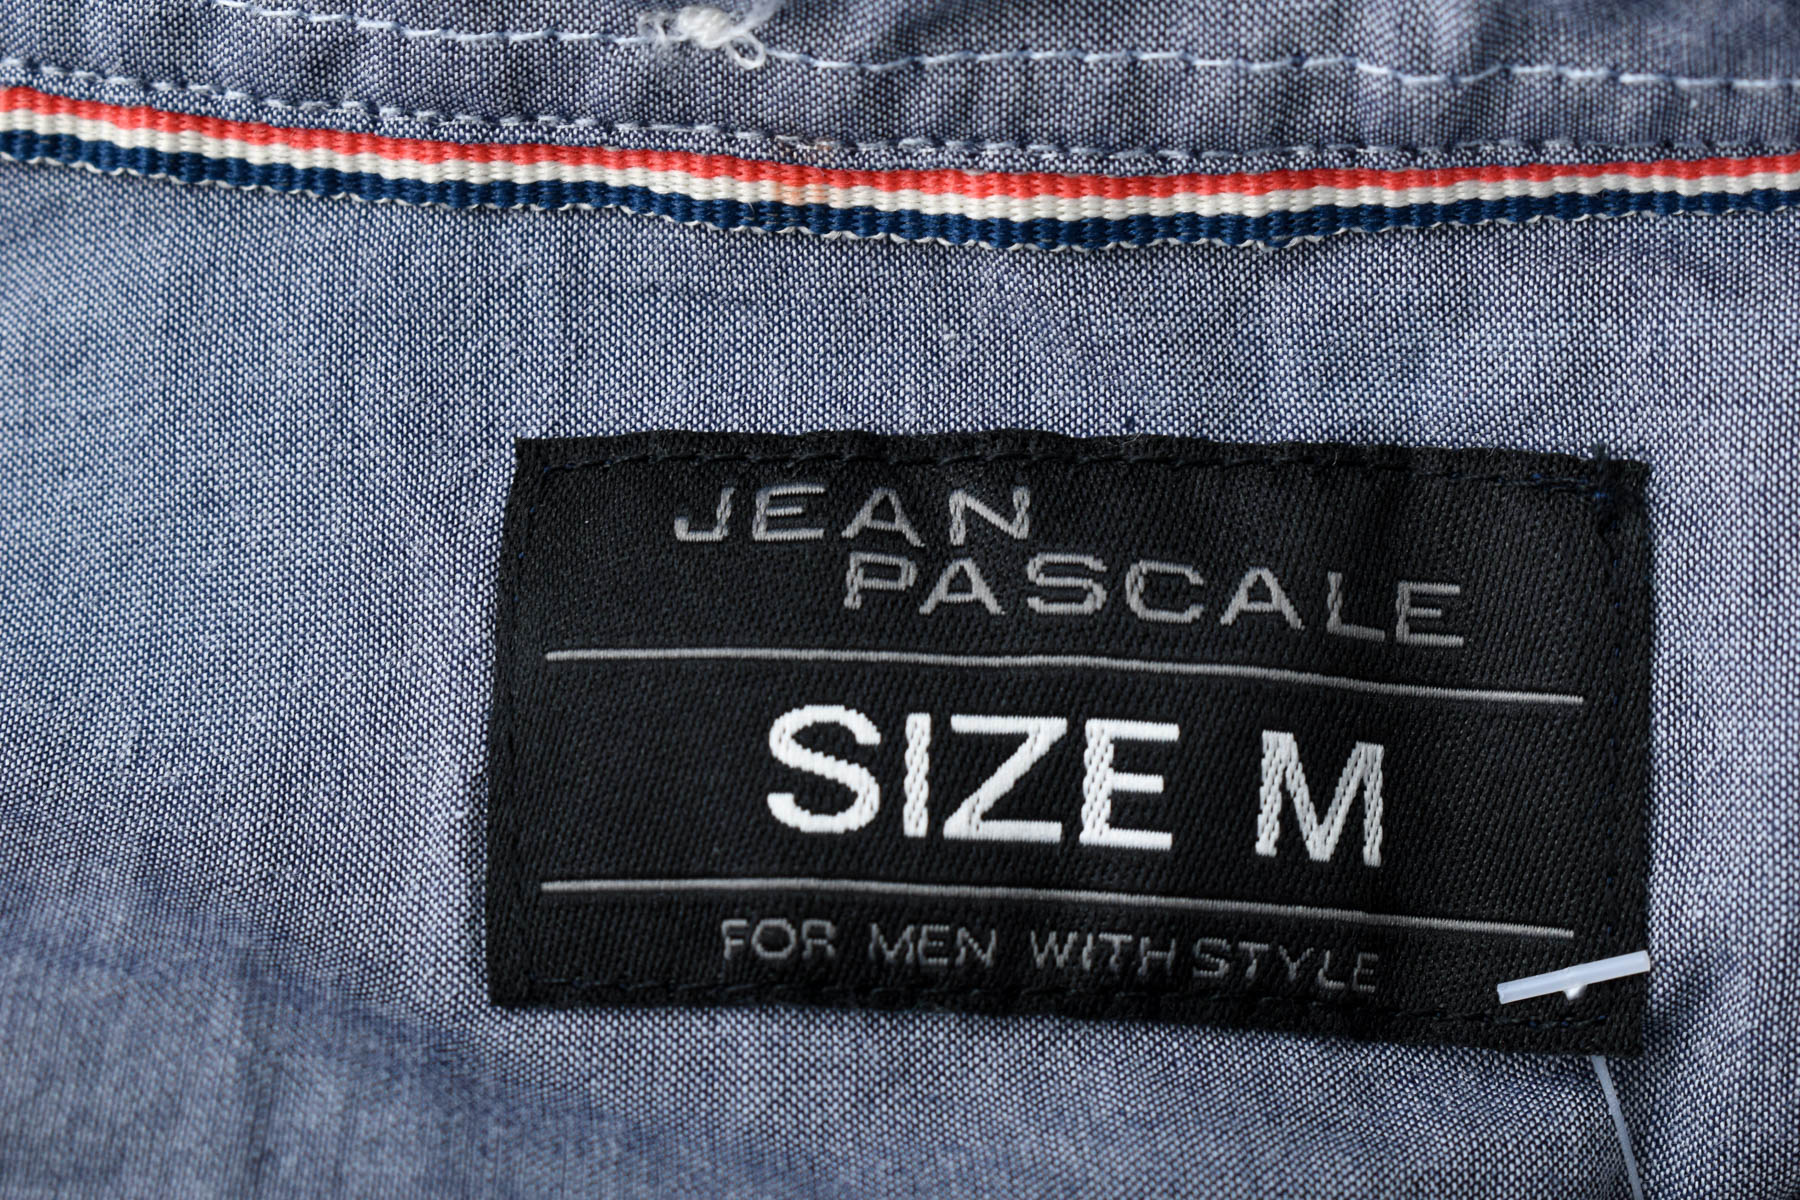 Men's shirt - Jean Pascale - 2